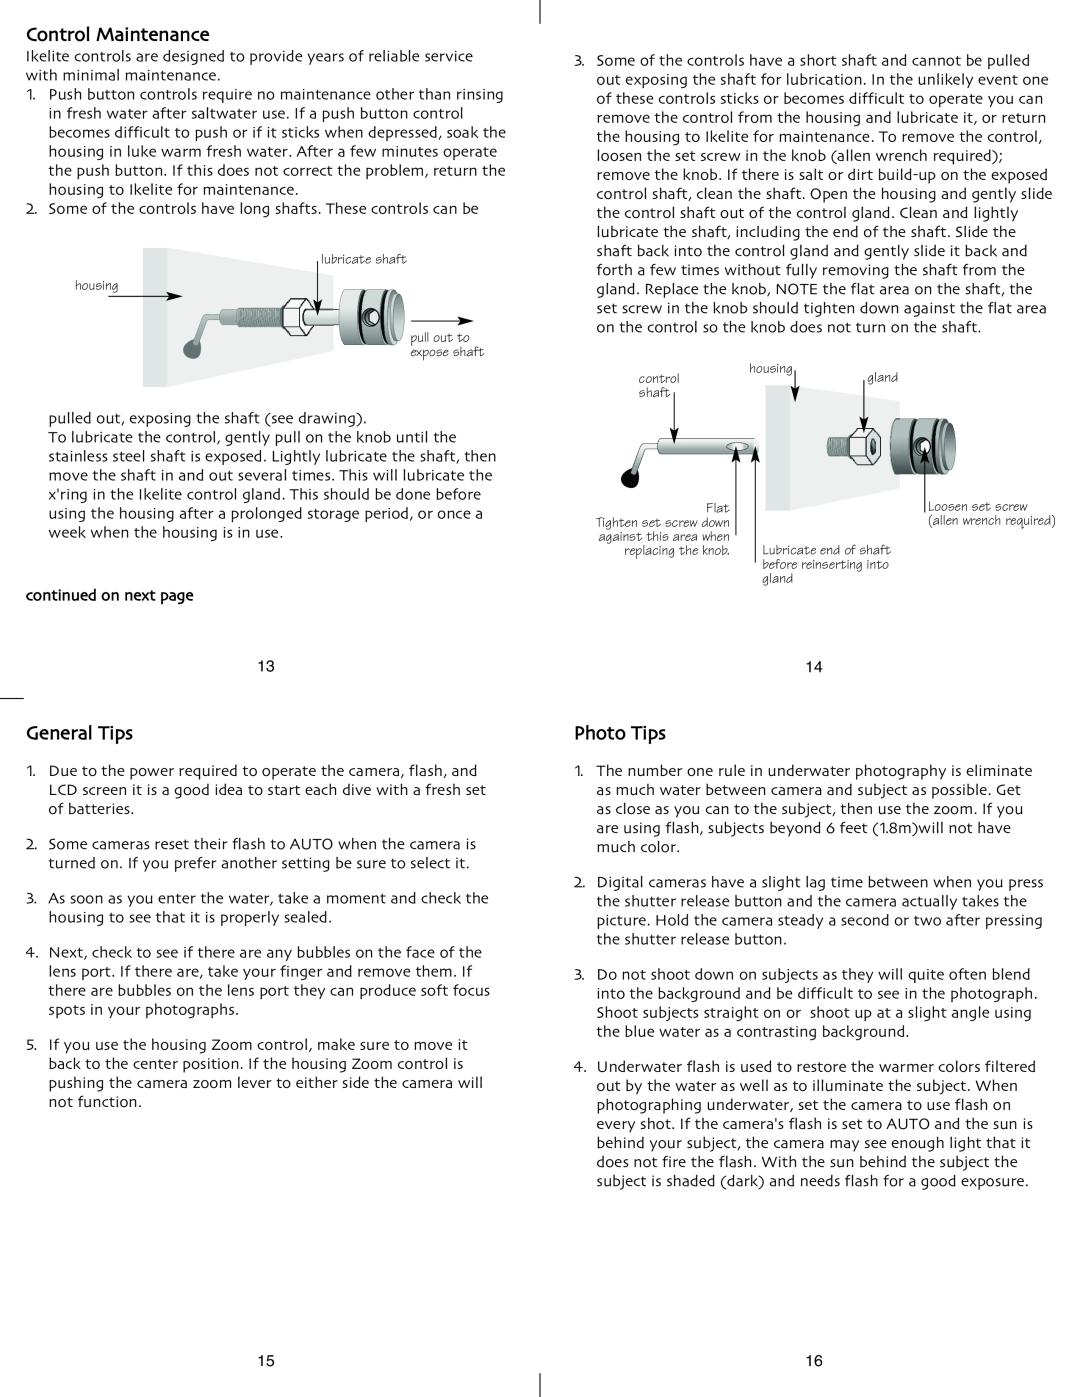 Ikelite Stylus 780, Mju780 instruction manual Control Maintenance, General Tips, Photo Tips 